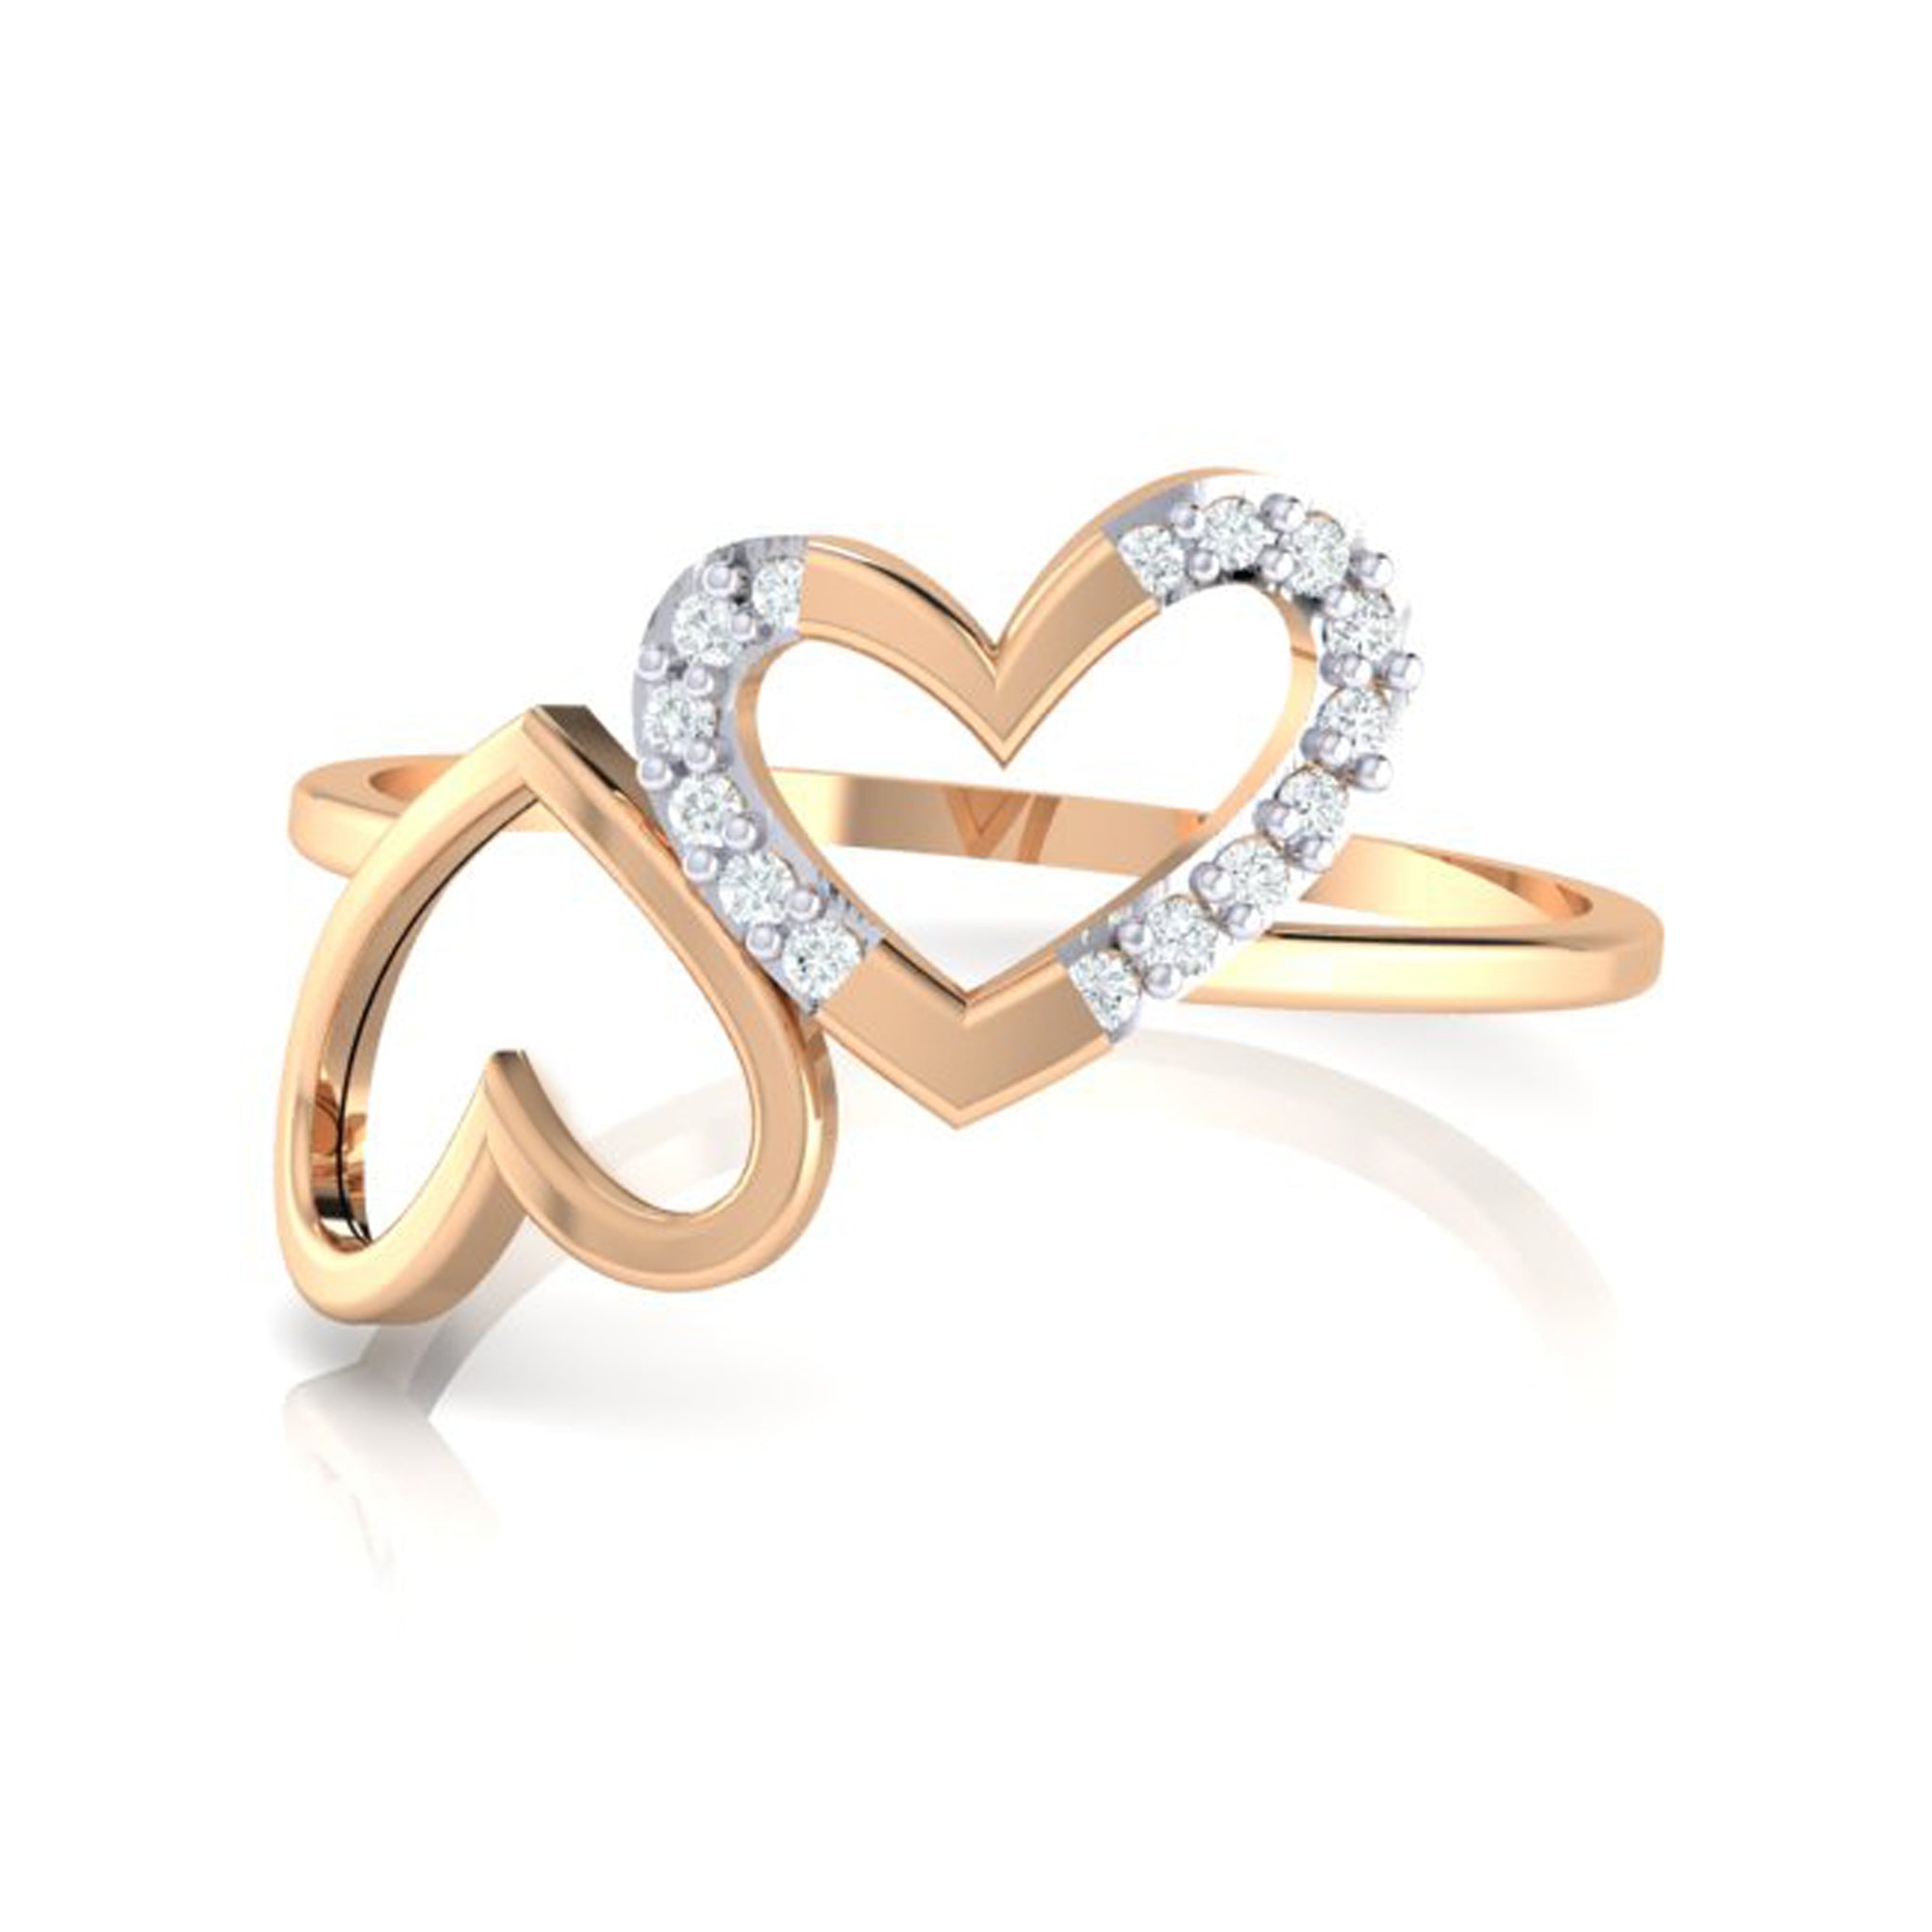 R3423ES-Modern engagement rings - wave shaped diamond ring - Olivacom